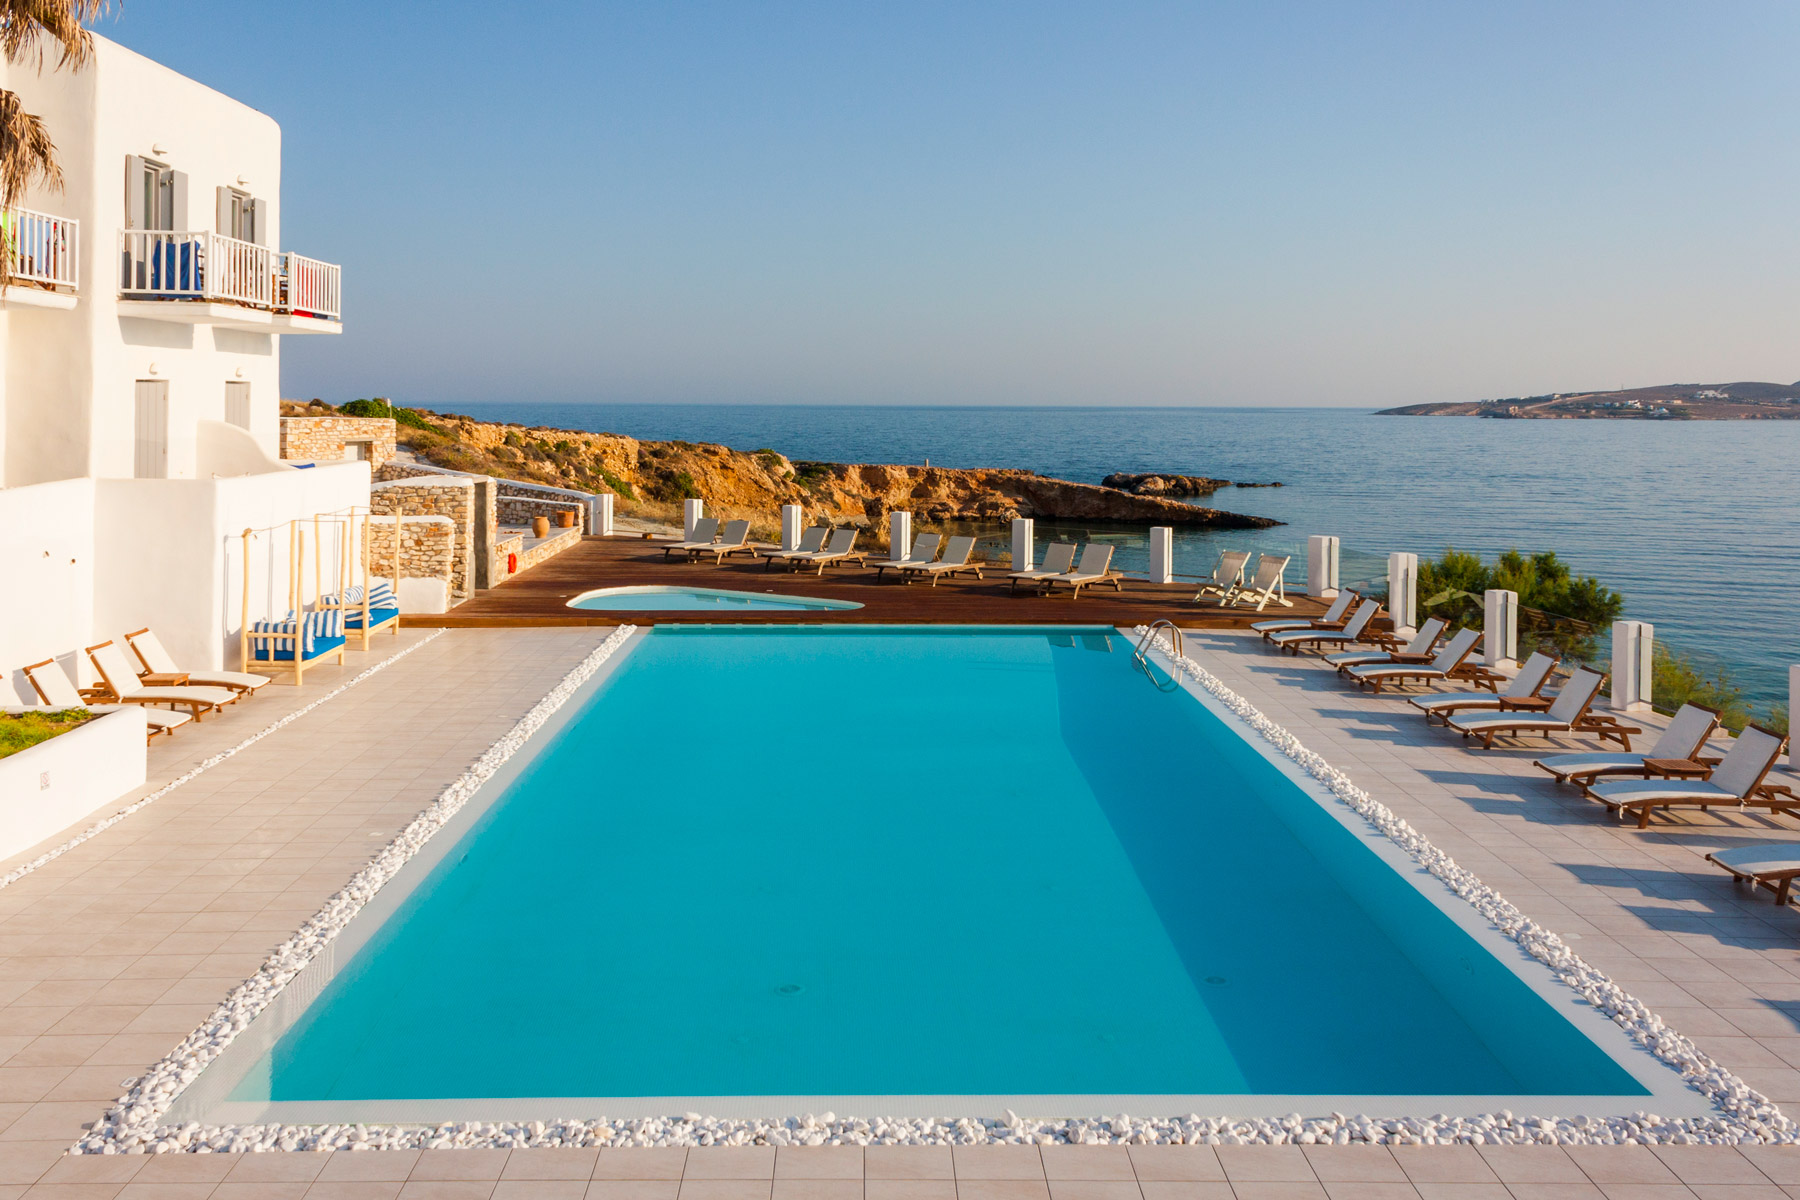 4* Paros Bay Sea Resort Hotel - Πάρος ✦ 2 Ημέρες (1 Διανυκτέρευση) ✦ 2 άτομα ✦ Πρωινό ✦ 01/05/2022 έως 30/09/2022 ✦ Δίπλα στην Παραλία!